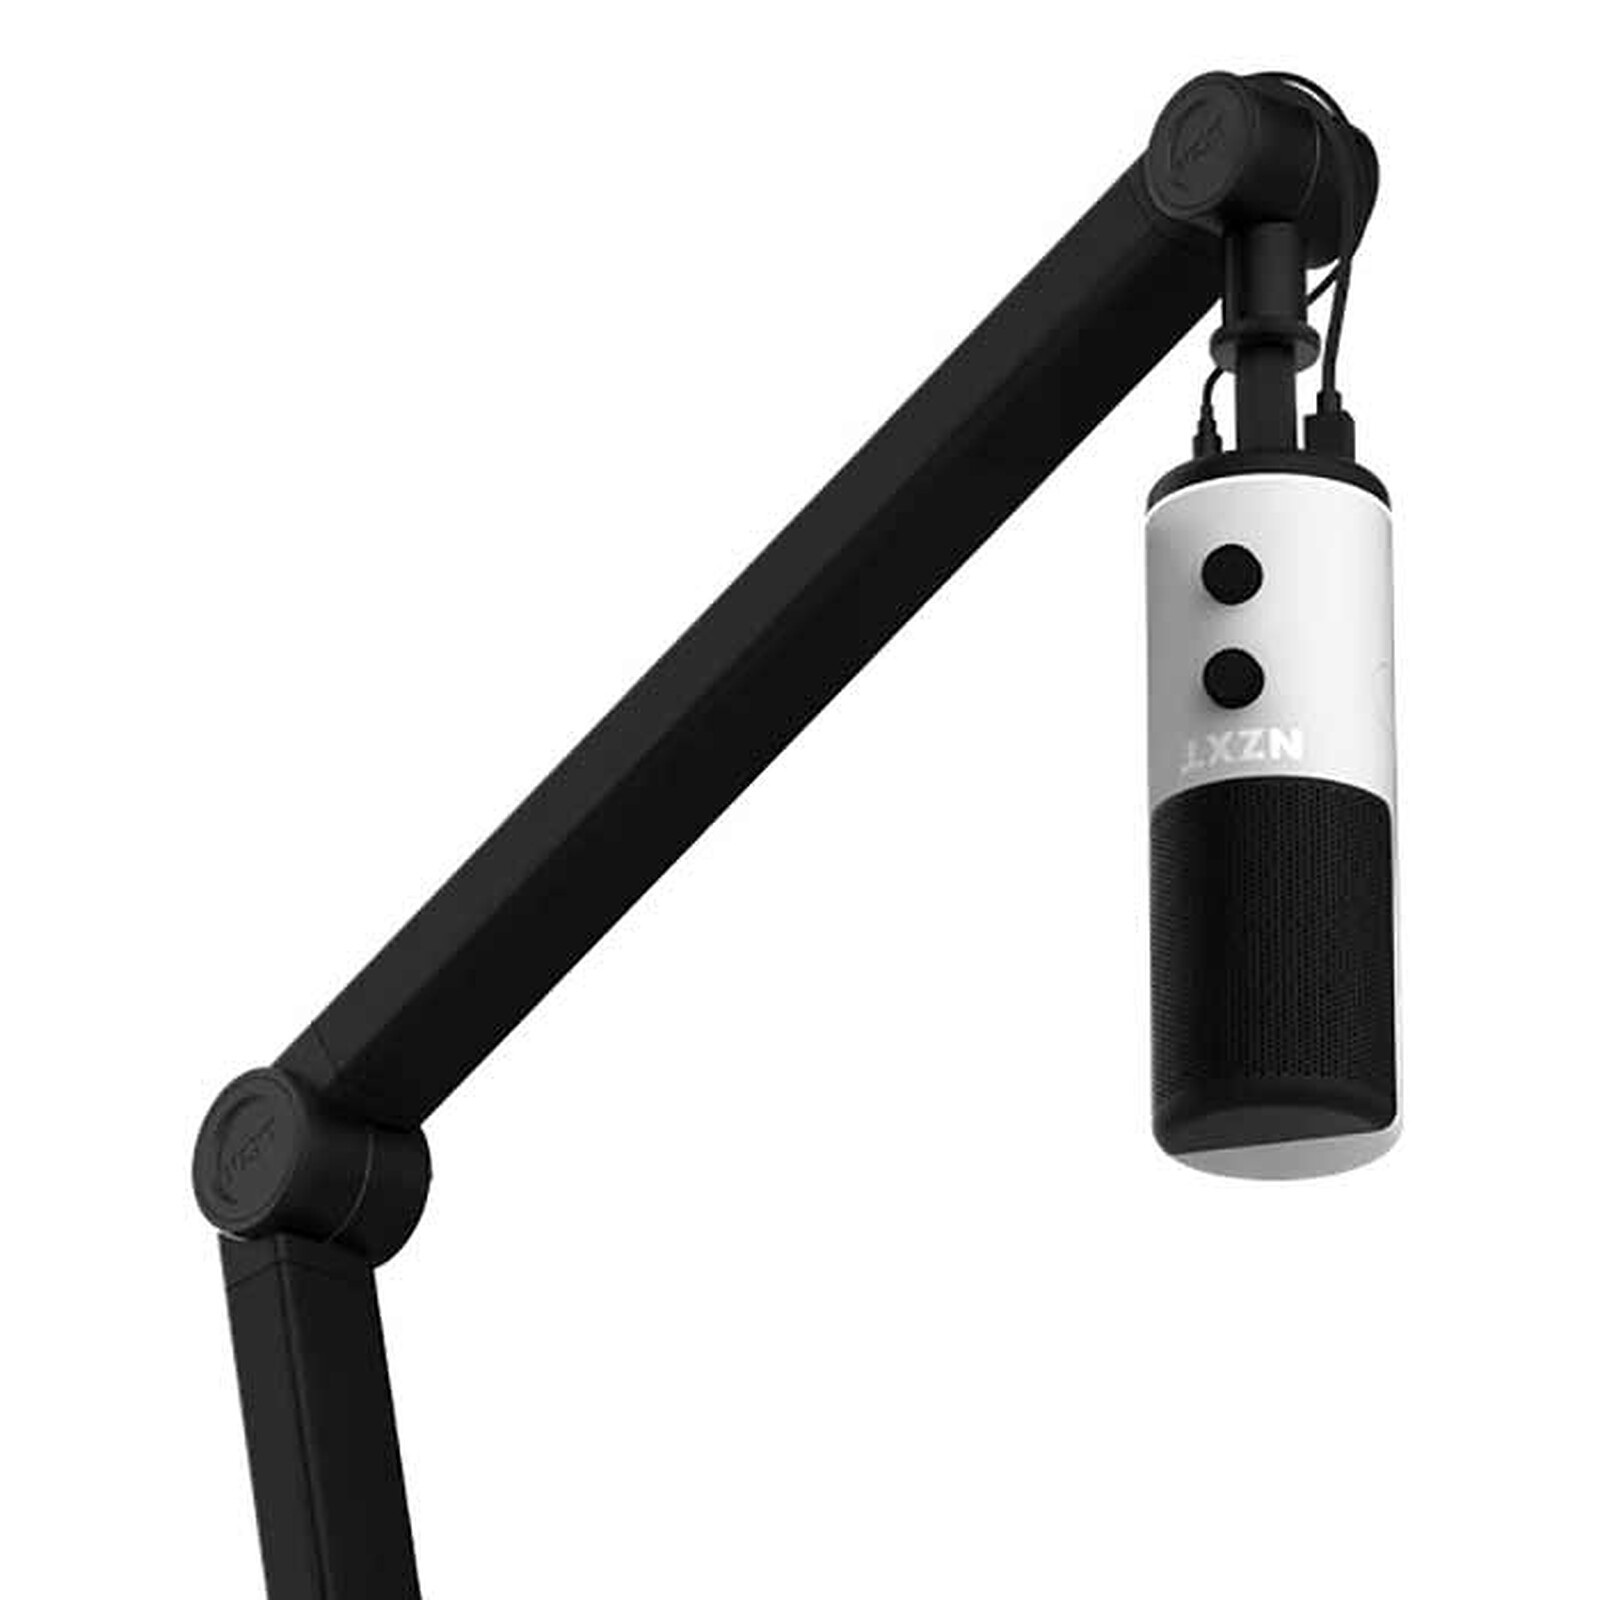 RODE PSA1 Bras articulé de microphone - Rotation 360° - Noir